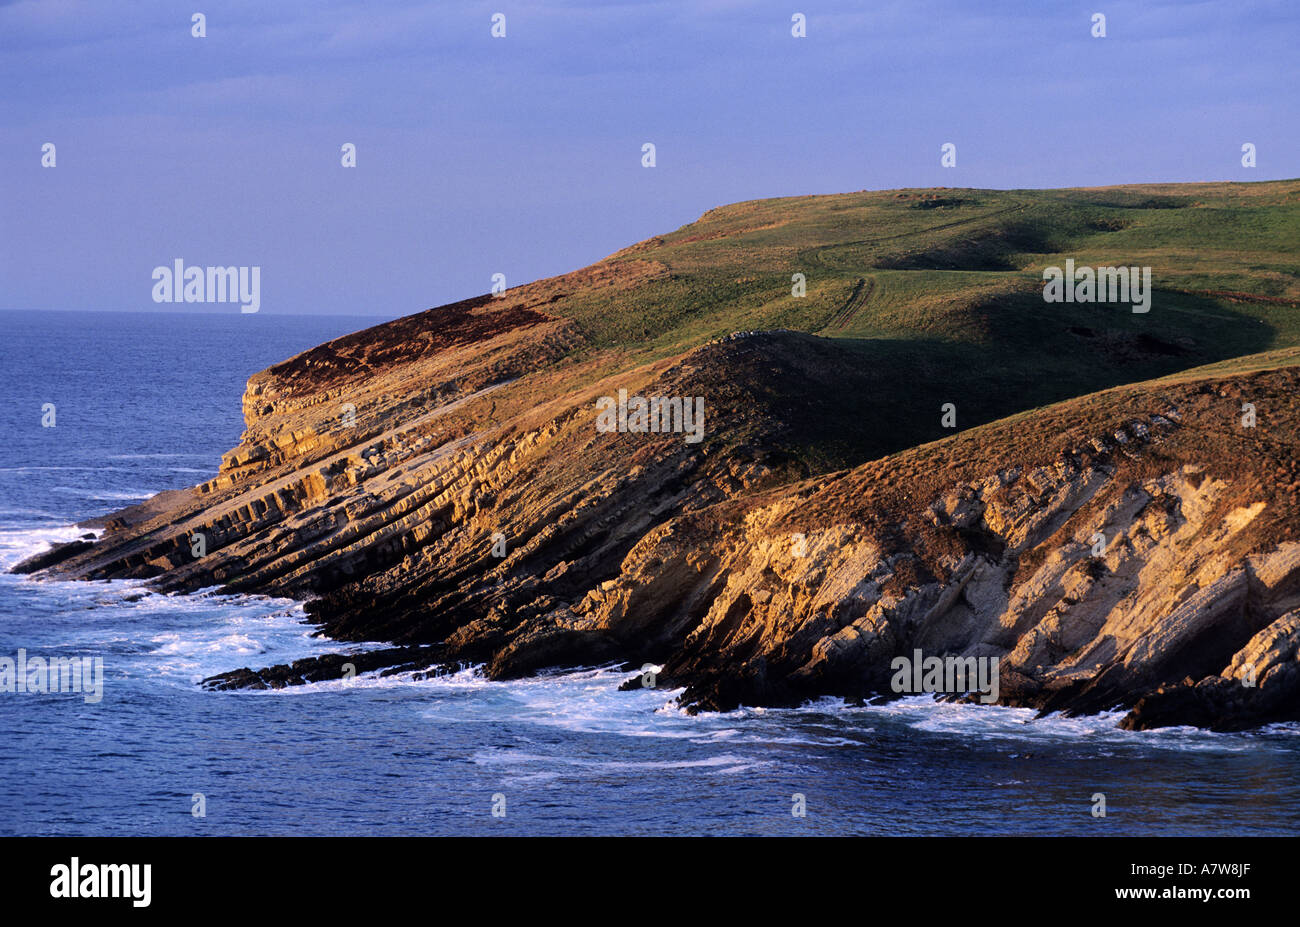 Spain, Asturias, Cantabrian coast, cliffs along the Atlantic Ocean shore Stock Photo